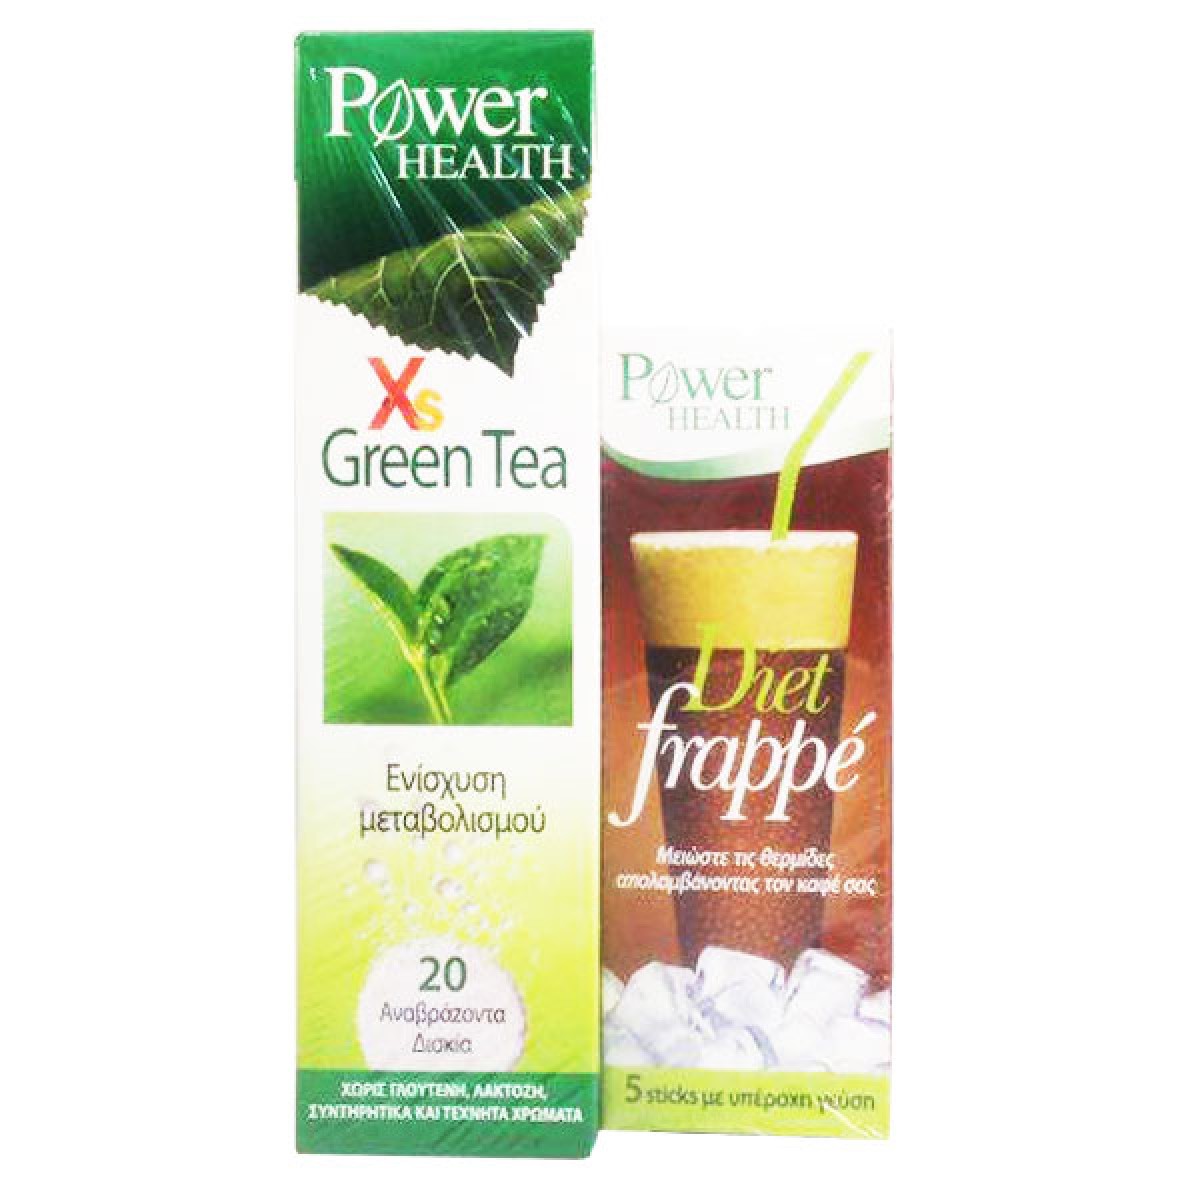 Power Health Xs Green Tea 20 Effervescent Tabs & Diet Frappe 5 Sticks